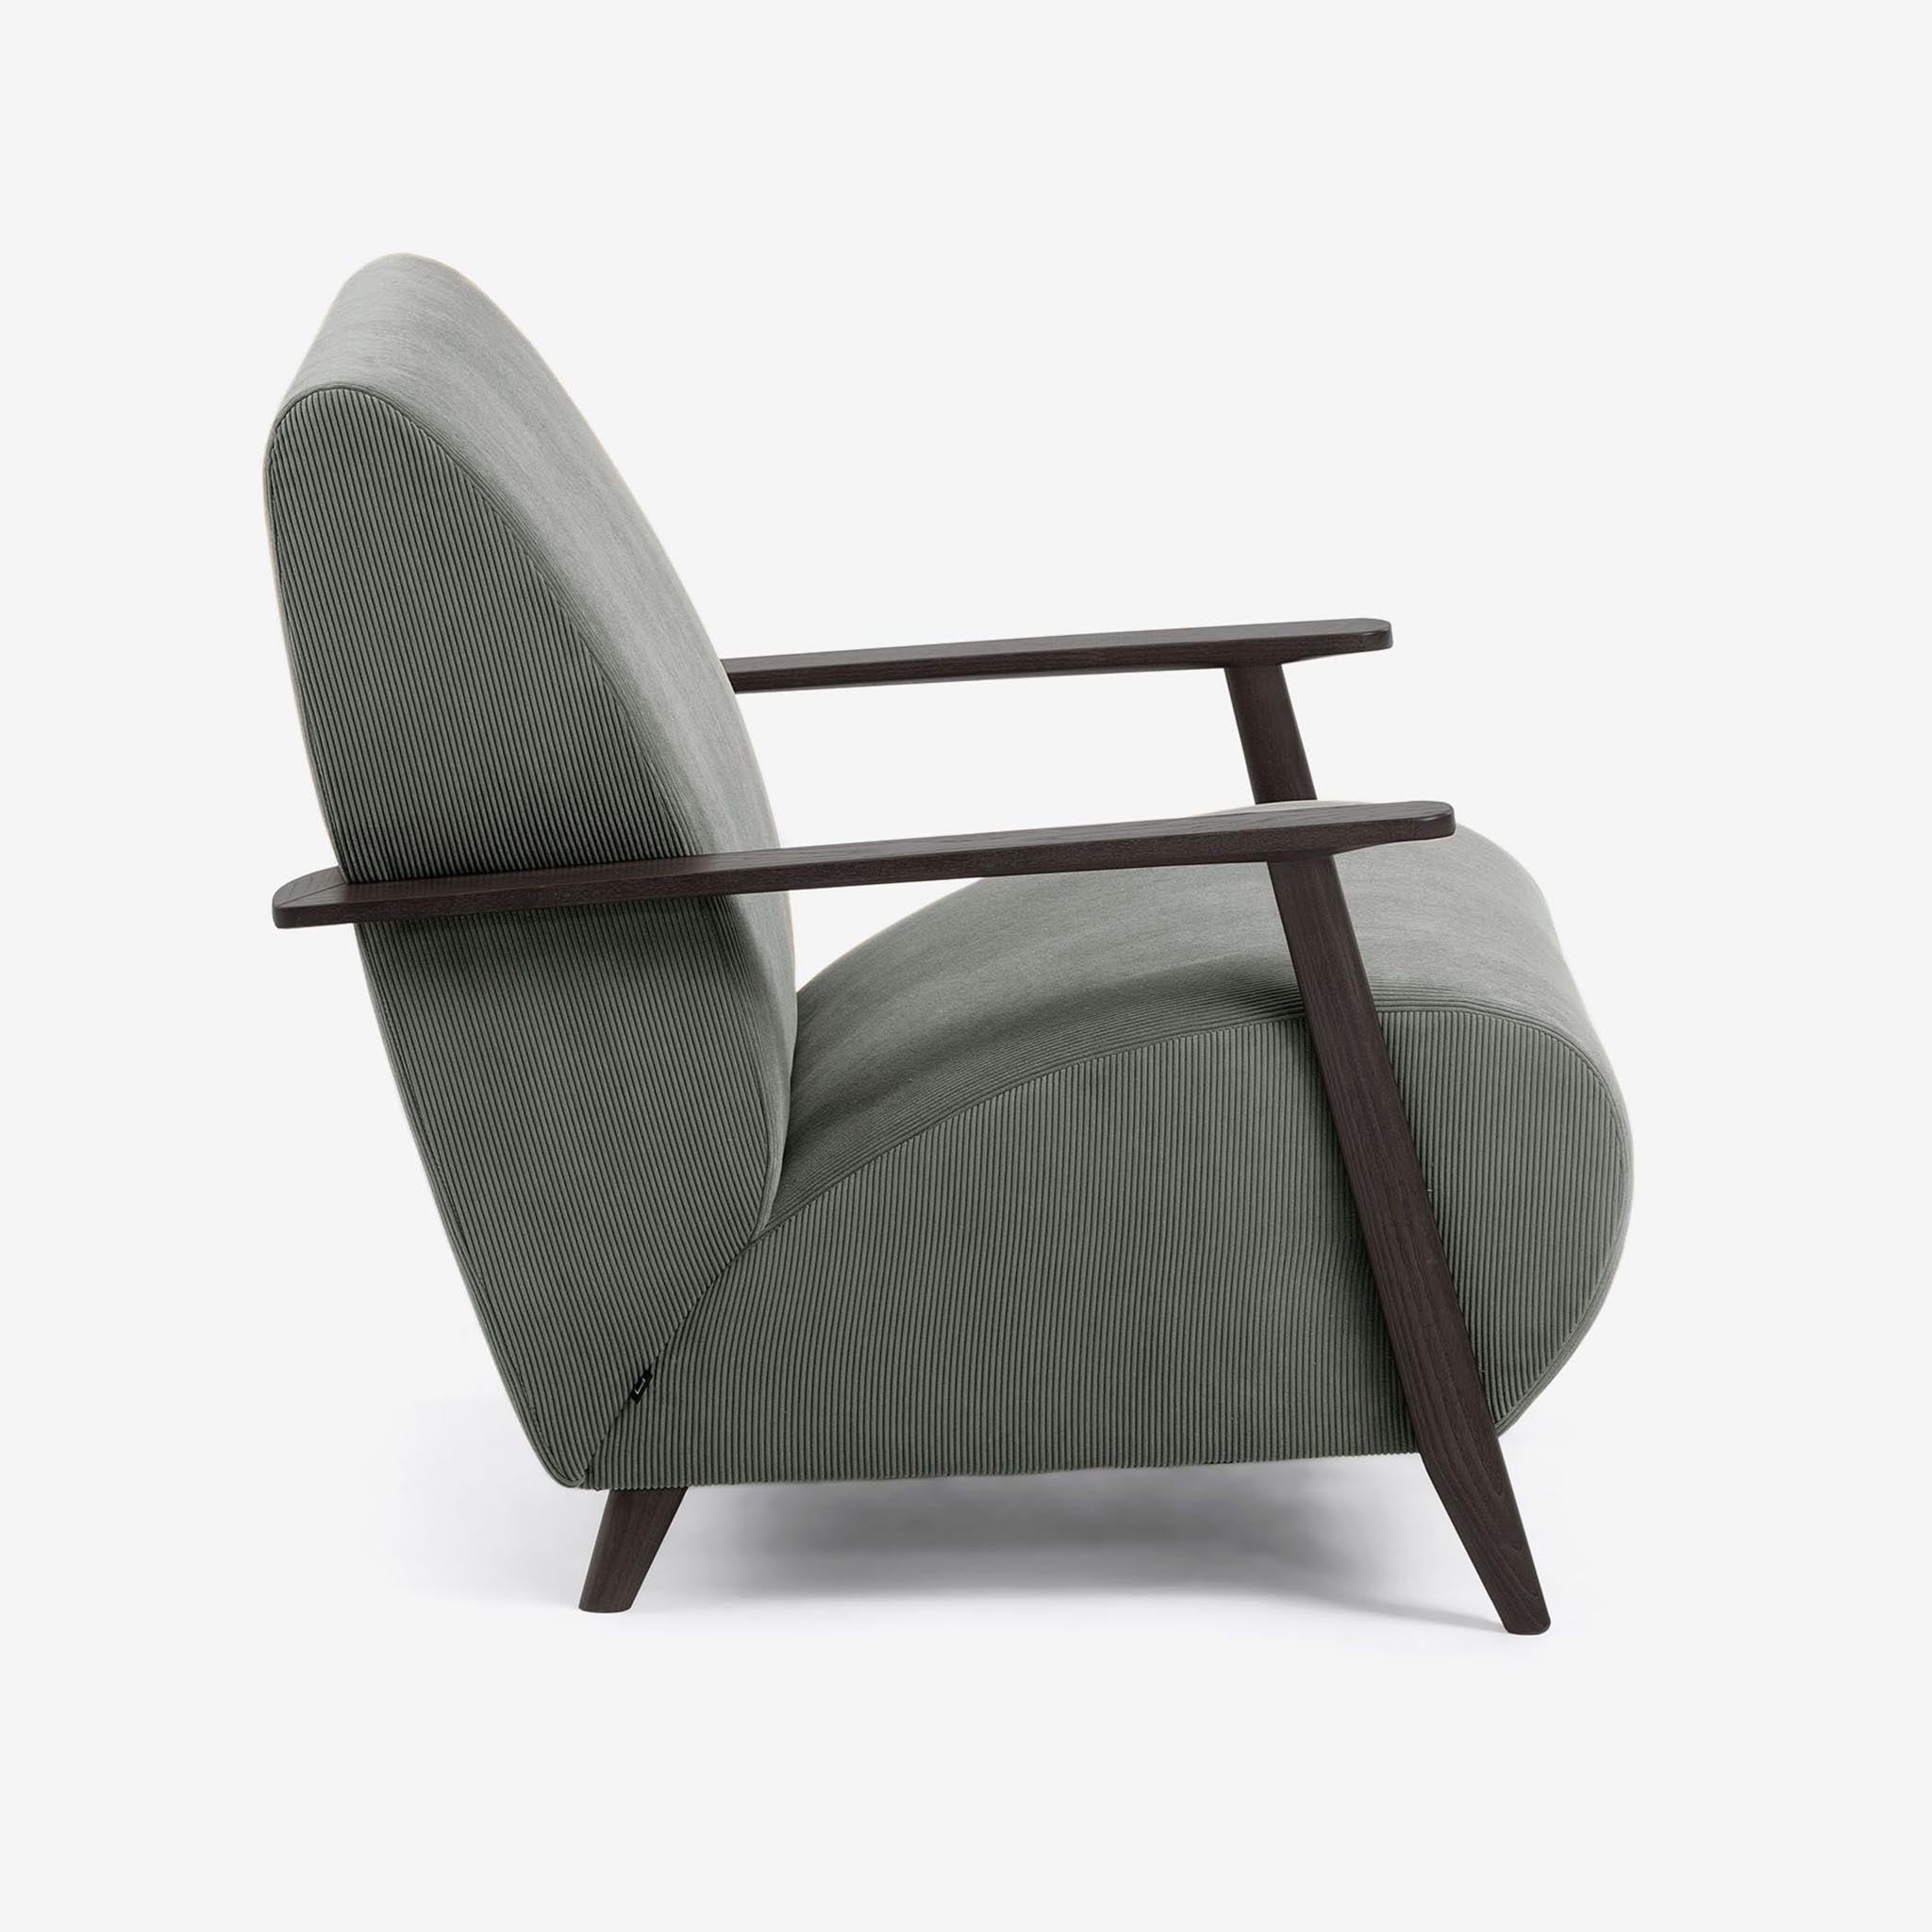 Kave Home Sessel Meghan - SKU #8433840565620 in Farbe Grau - Beine in dunklen Eschenholz - Seitlich